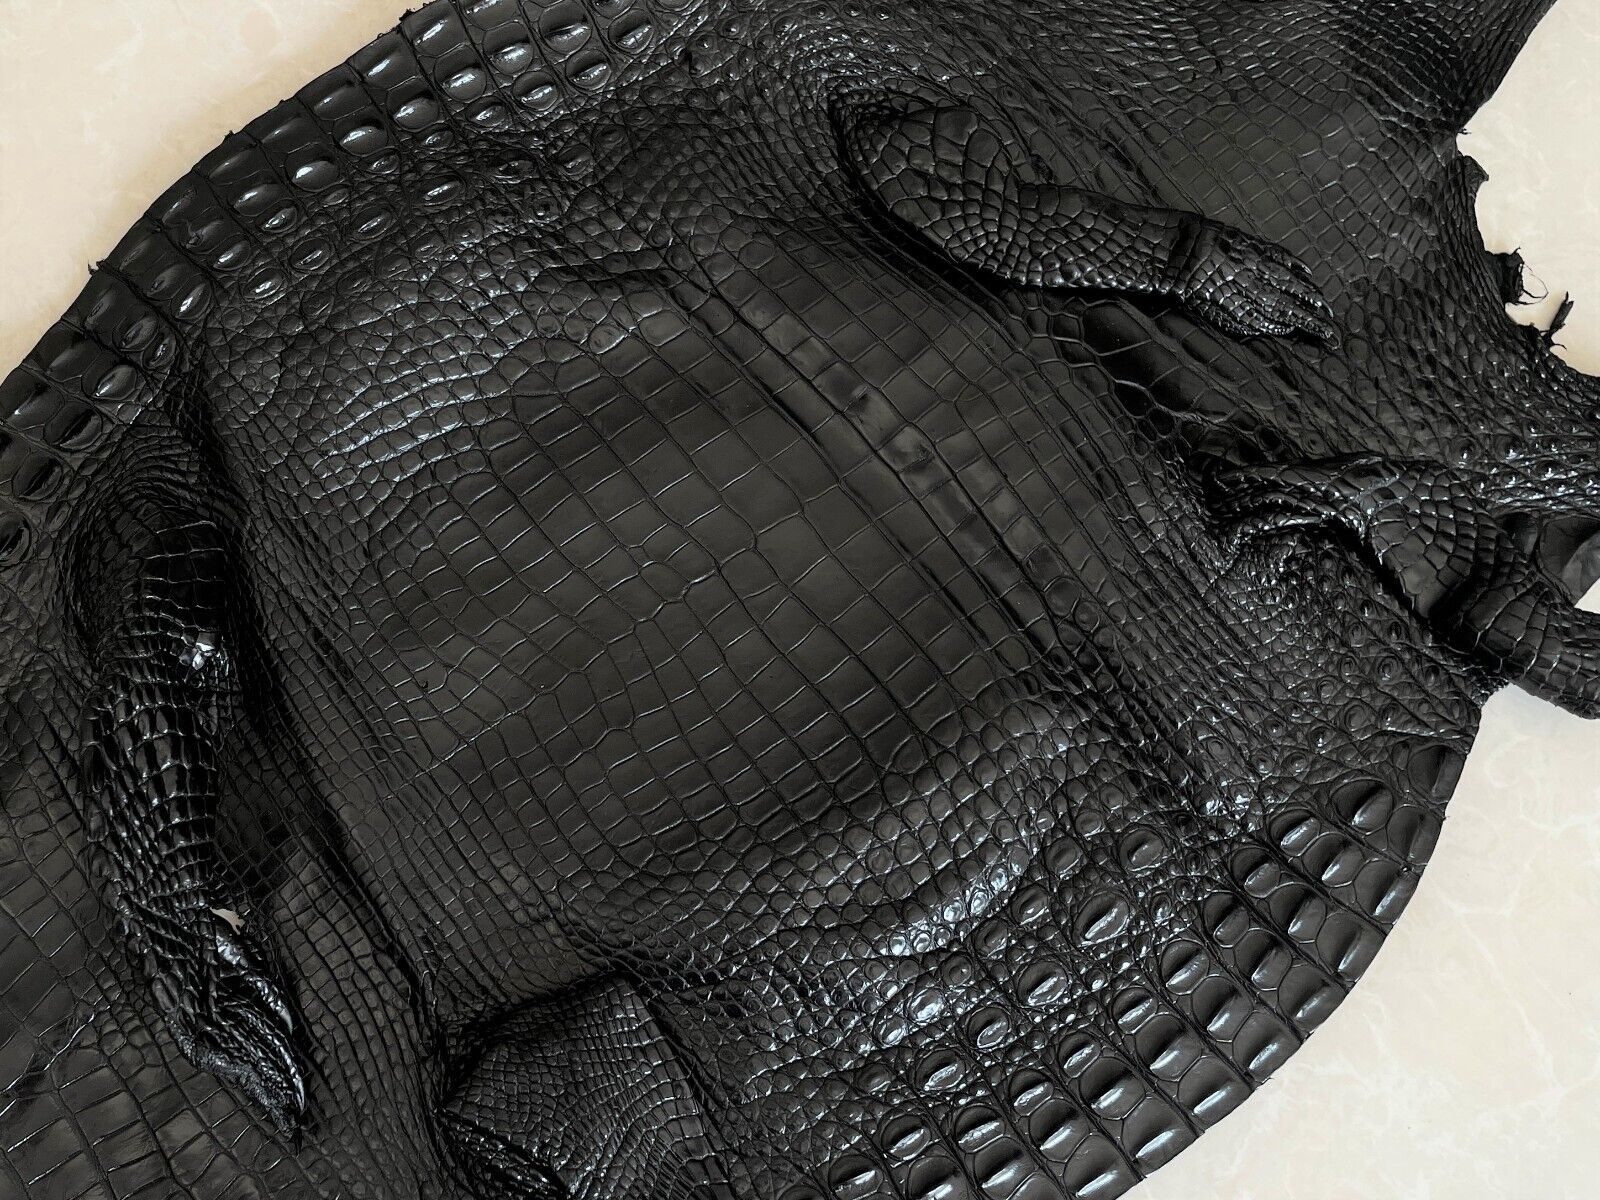 Genuine Crocodile, Alligator Skin Leather Hide Exotic Pelt Black taxidermy  Craft